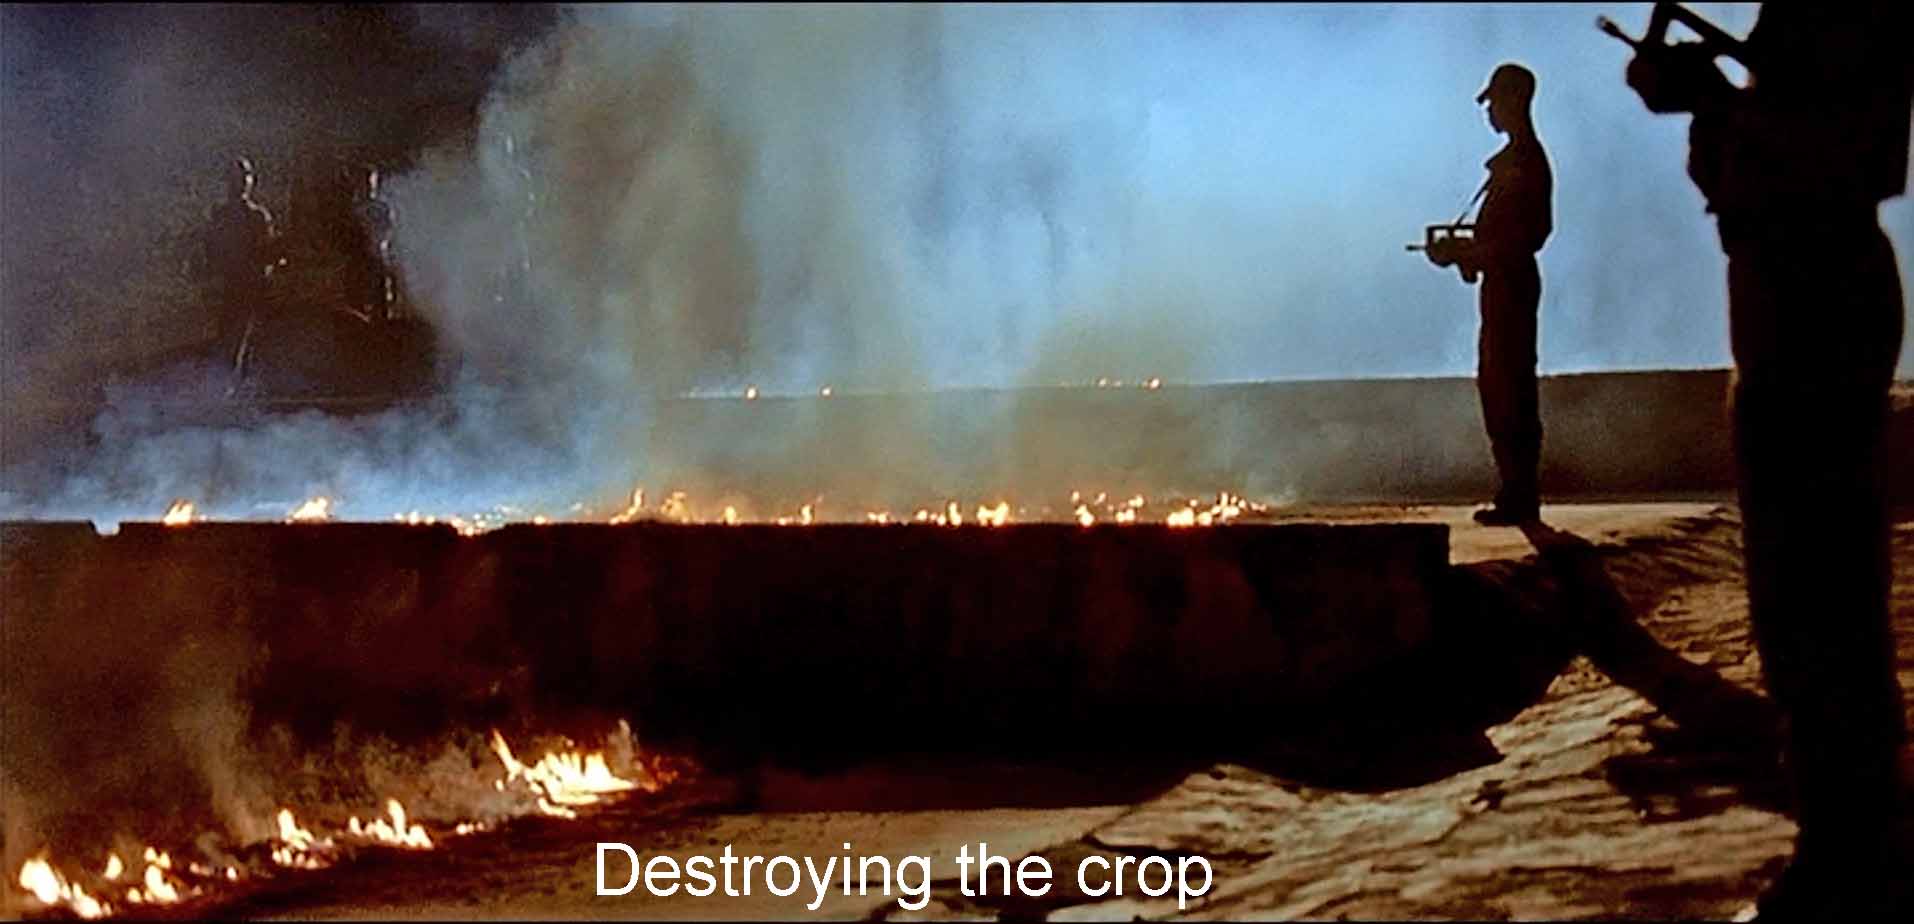 Destroying the crop